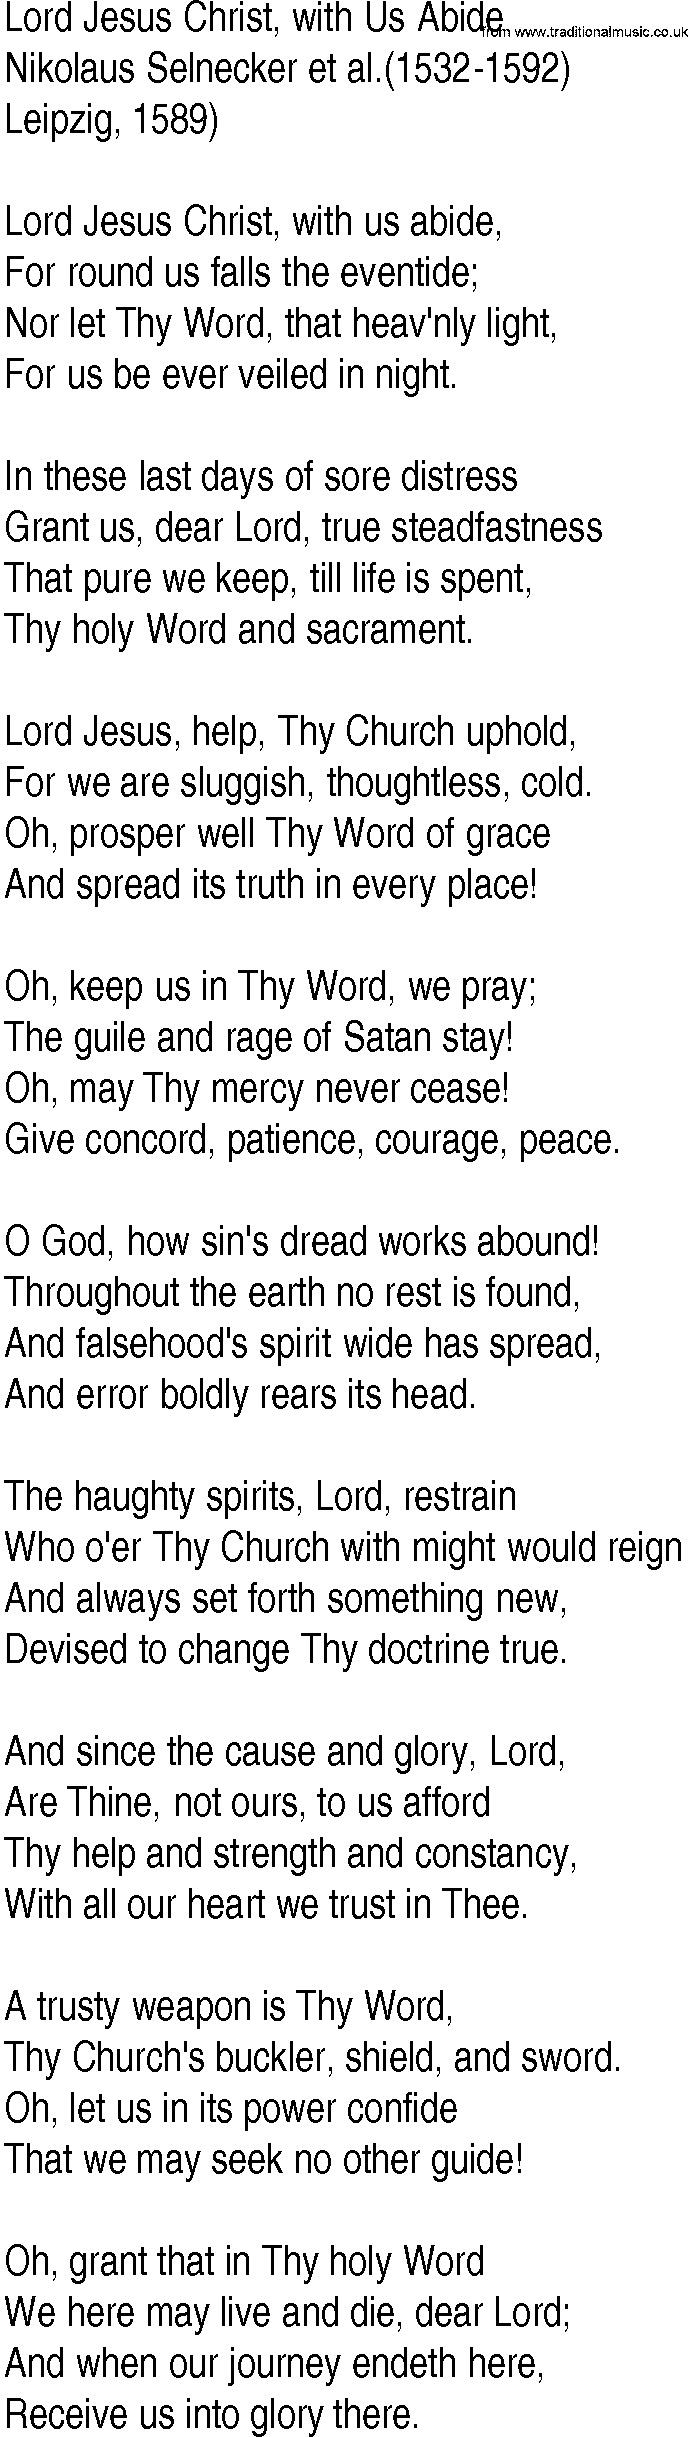 Hymn and Gospel Song: Lord Jesus Christ, with Us Abide by Nikolaus Selnecker et al lyrics